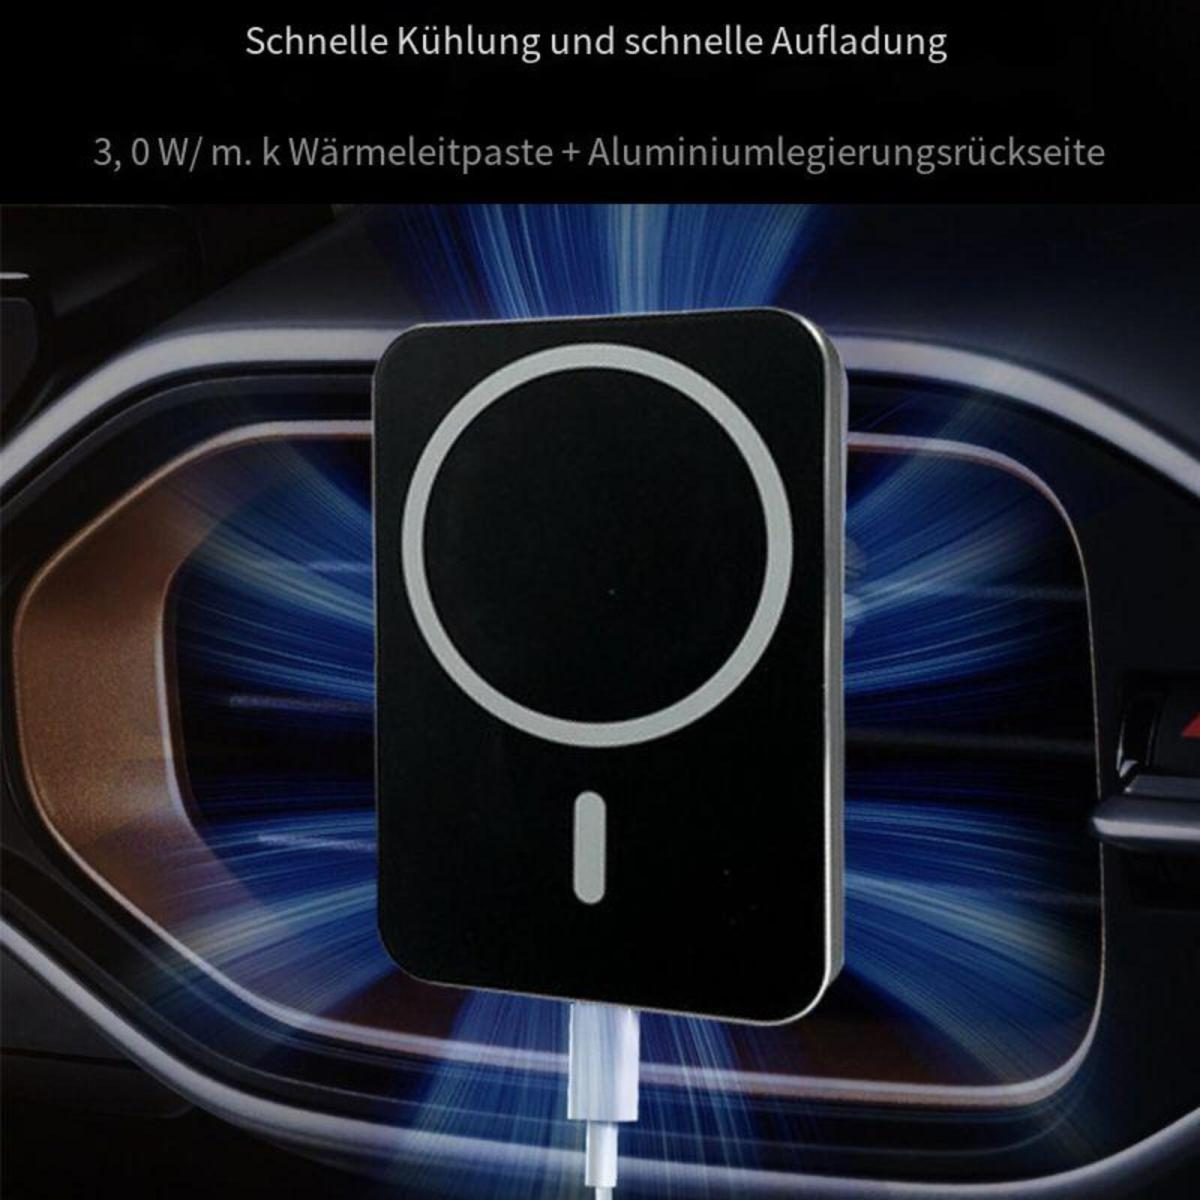 ELKUAIE Gilt für Schwarz Canon, Ladegerät 12 iPhone Drahtloses